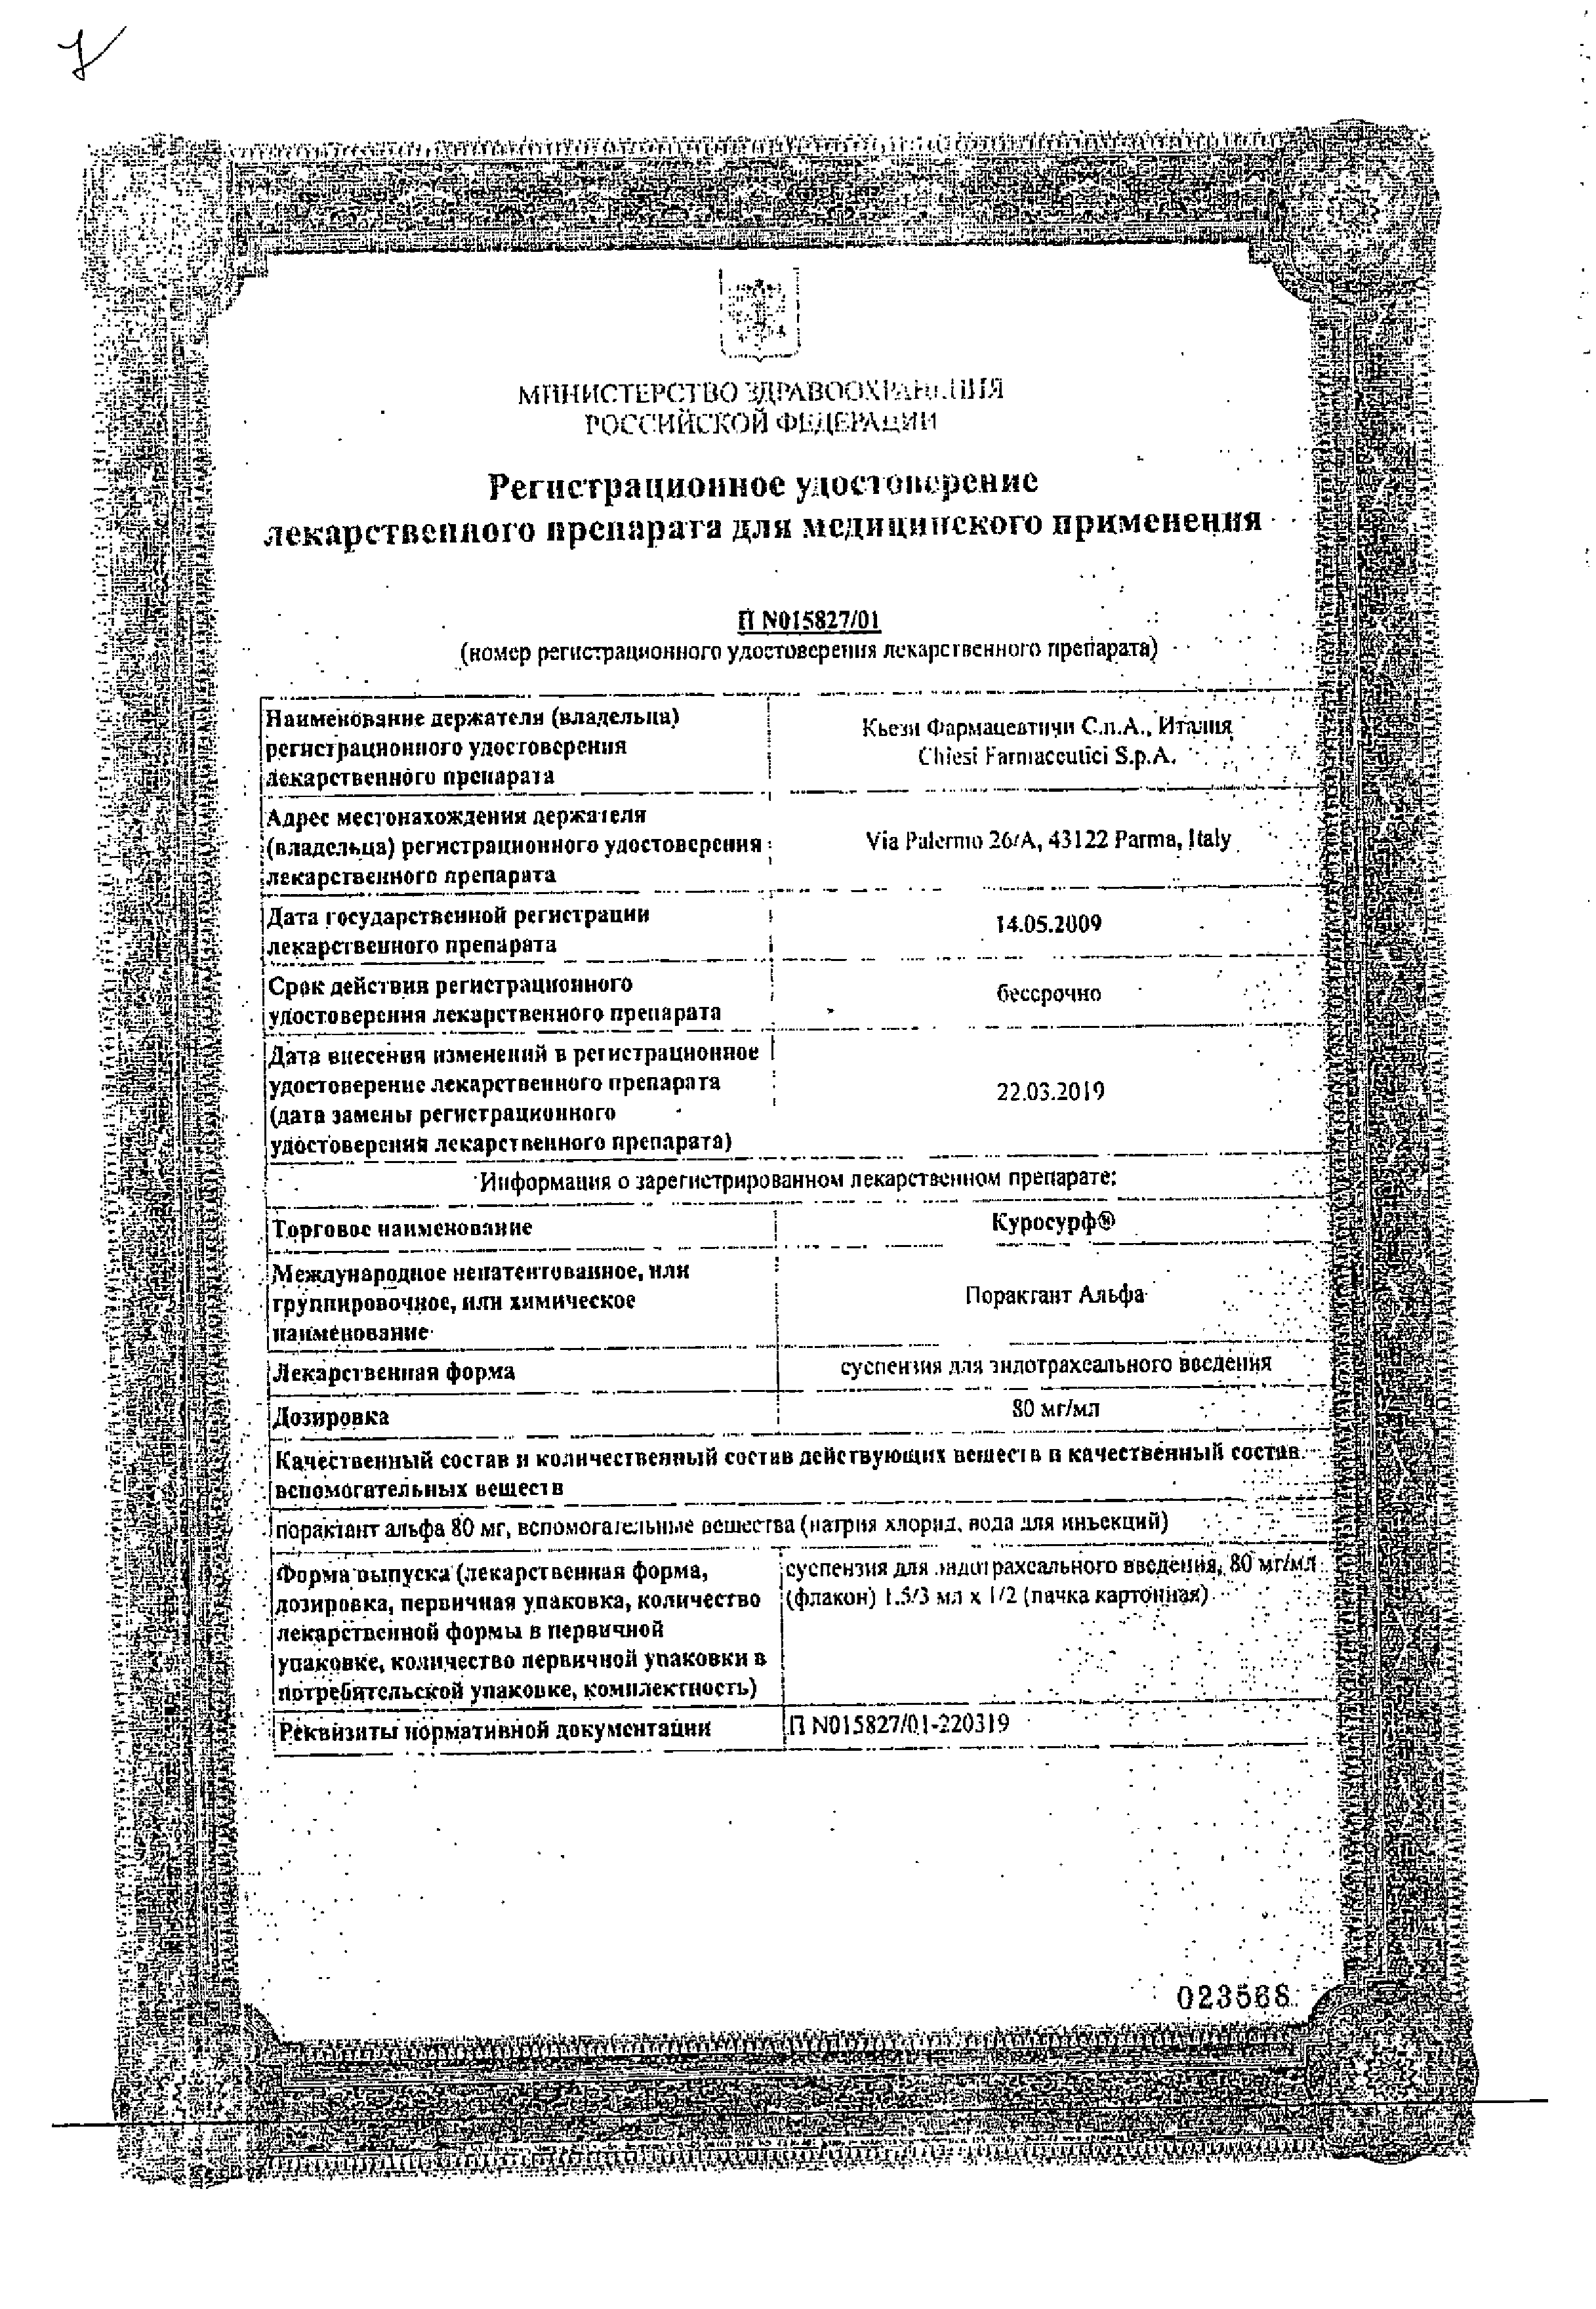 Куросурф сертификат